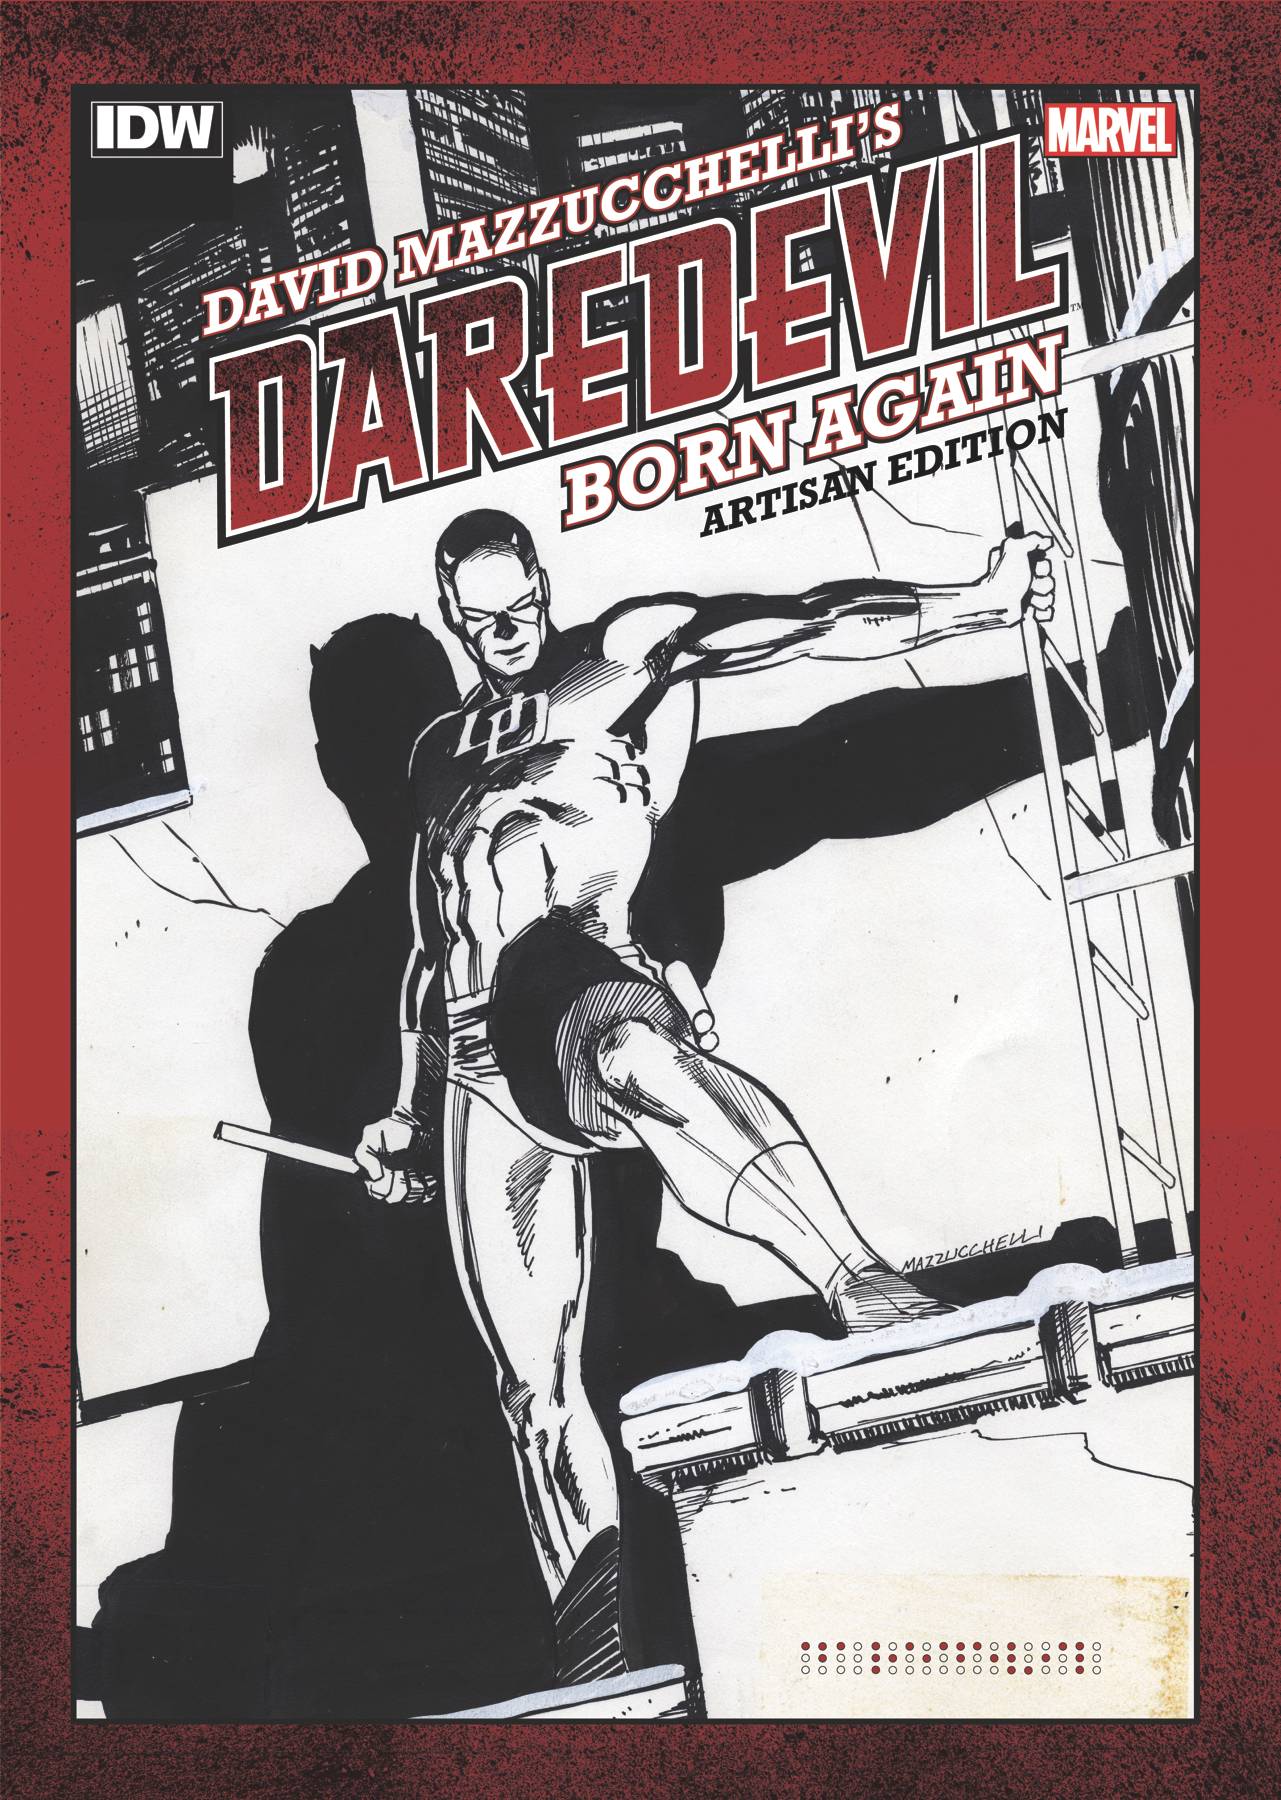 Artisan Edition Graphic Novel Volume 1 David Mazzuchelli's Daredevil Born Again